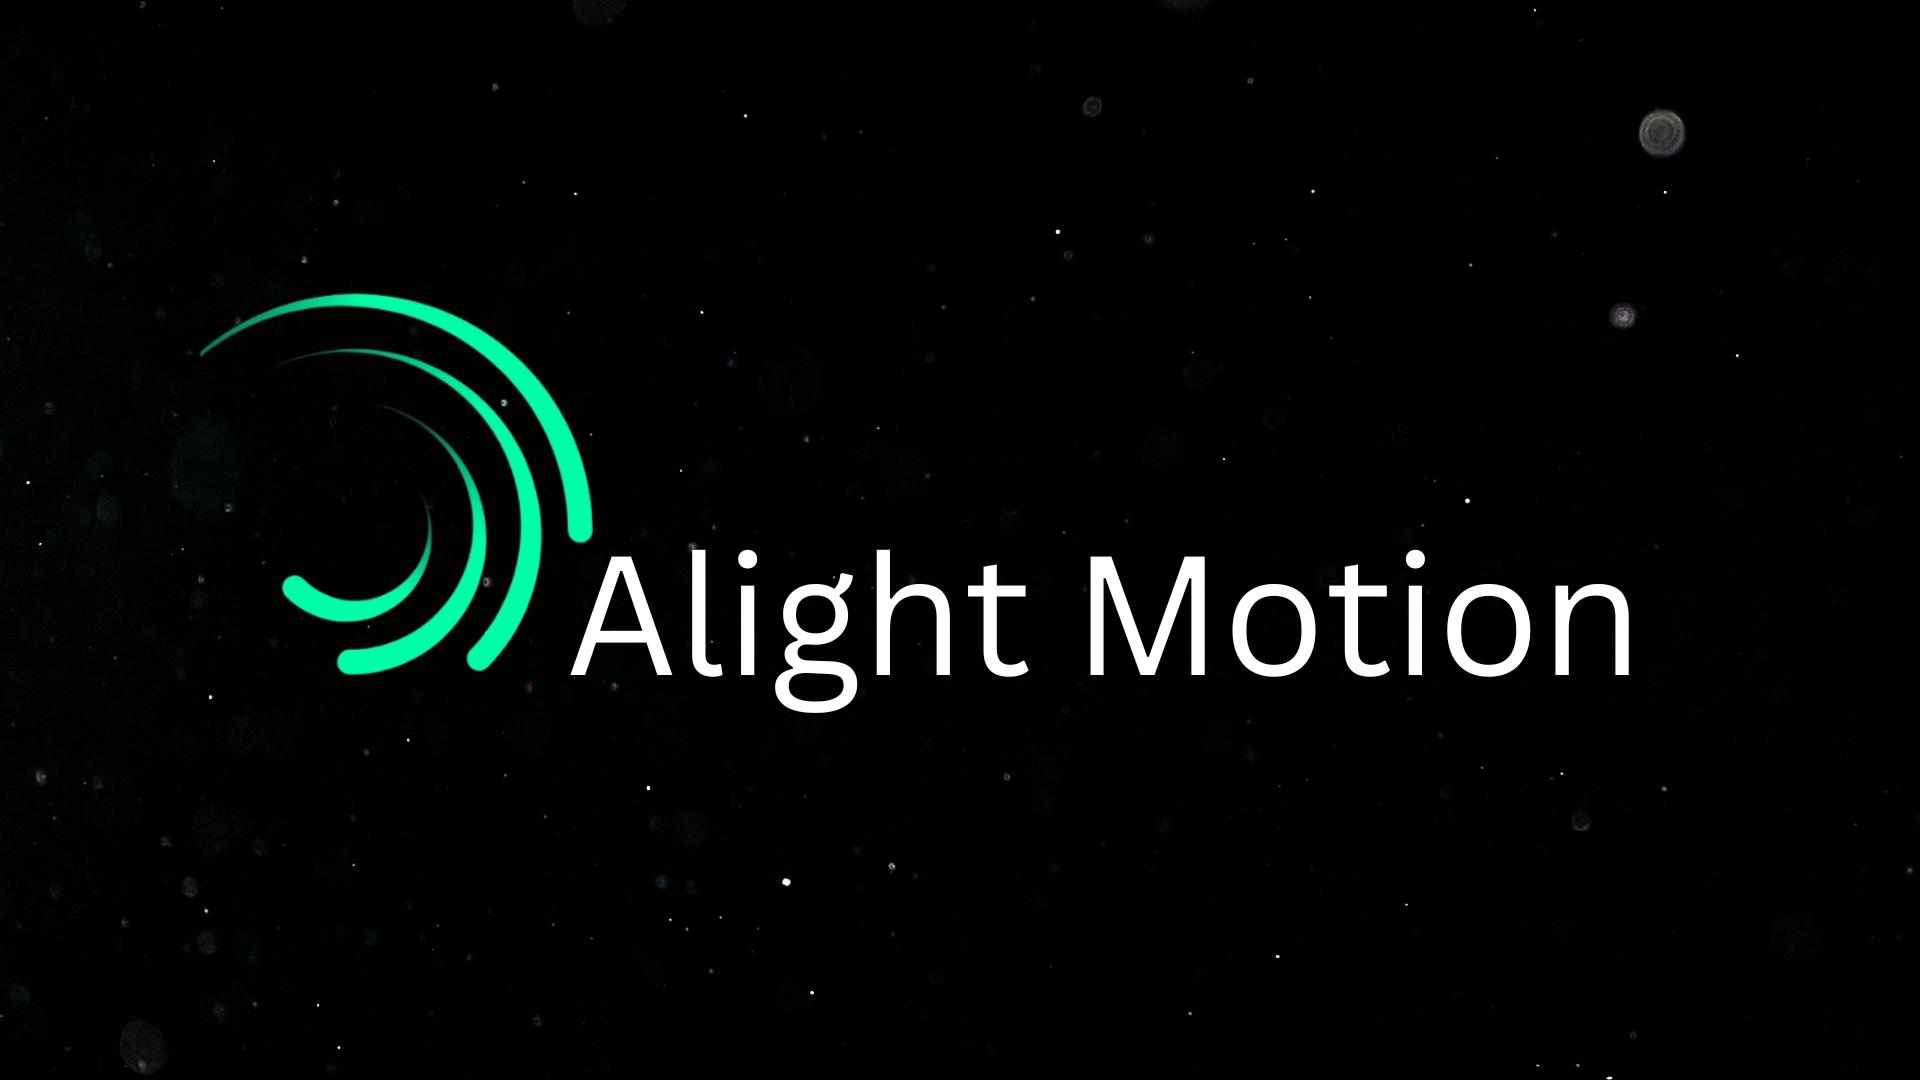 Alight motion | galaxy app icon | galaxy alight motion icon | app icons |  Creative iphone case, App icon, Iphone cases